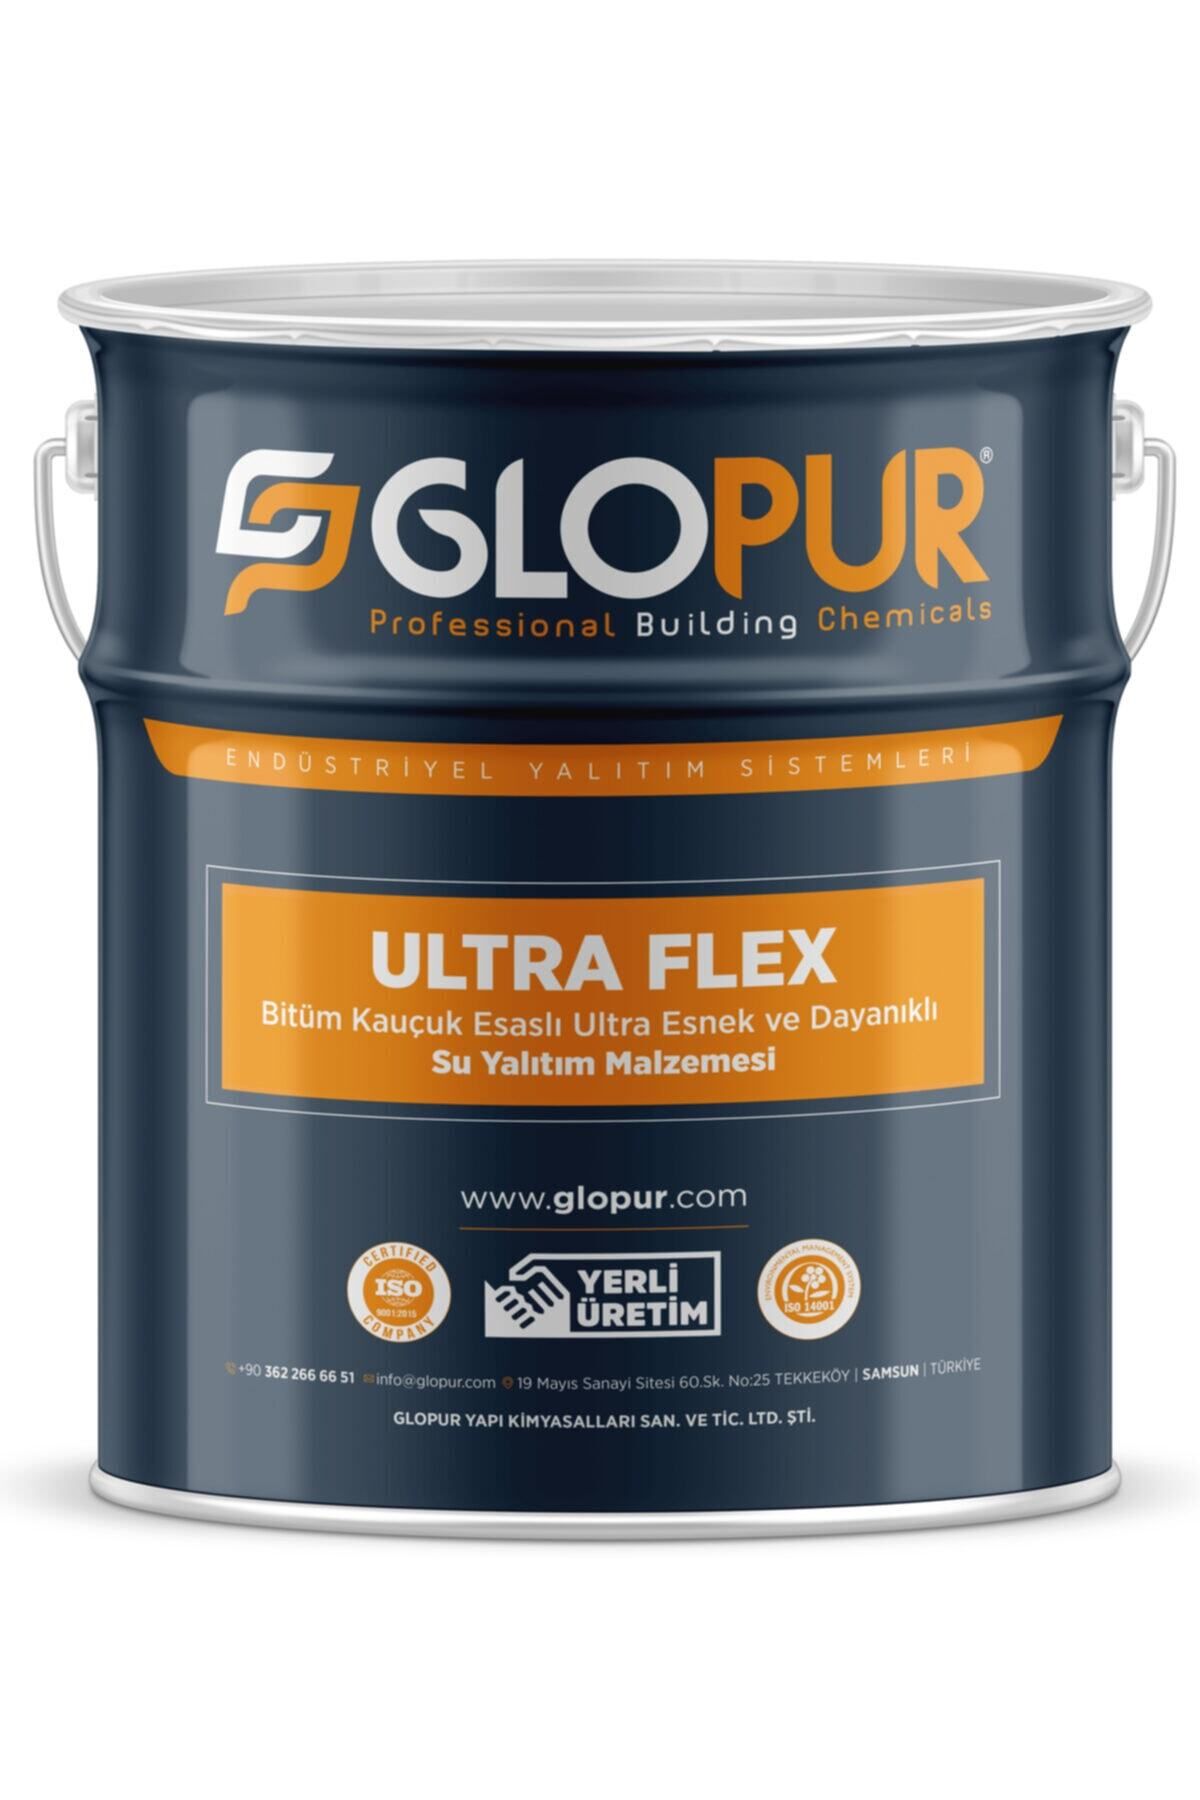 GLOPUR - Likit Membran Ultra Flex Su Yatılım Malzemesi 15 kg